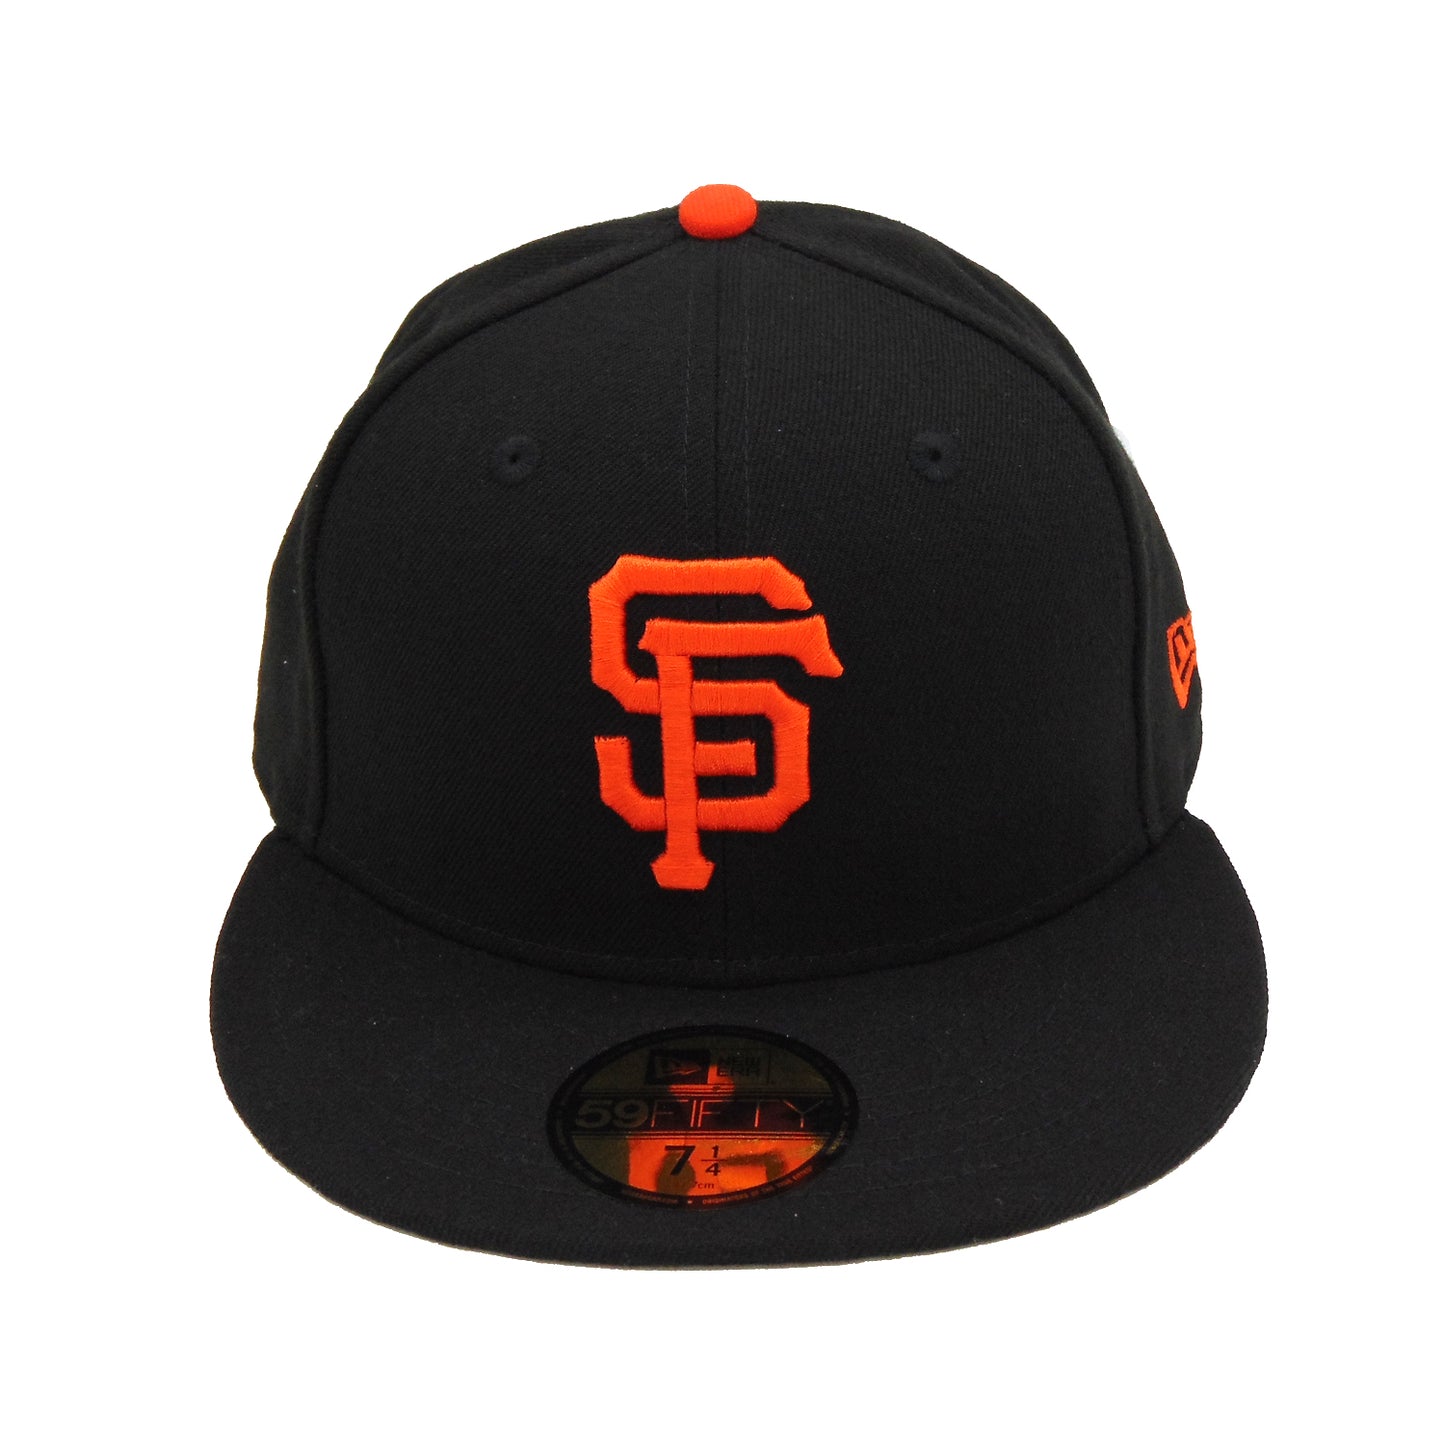 San Francisco Giants Authentic New Era Cap Black